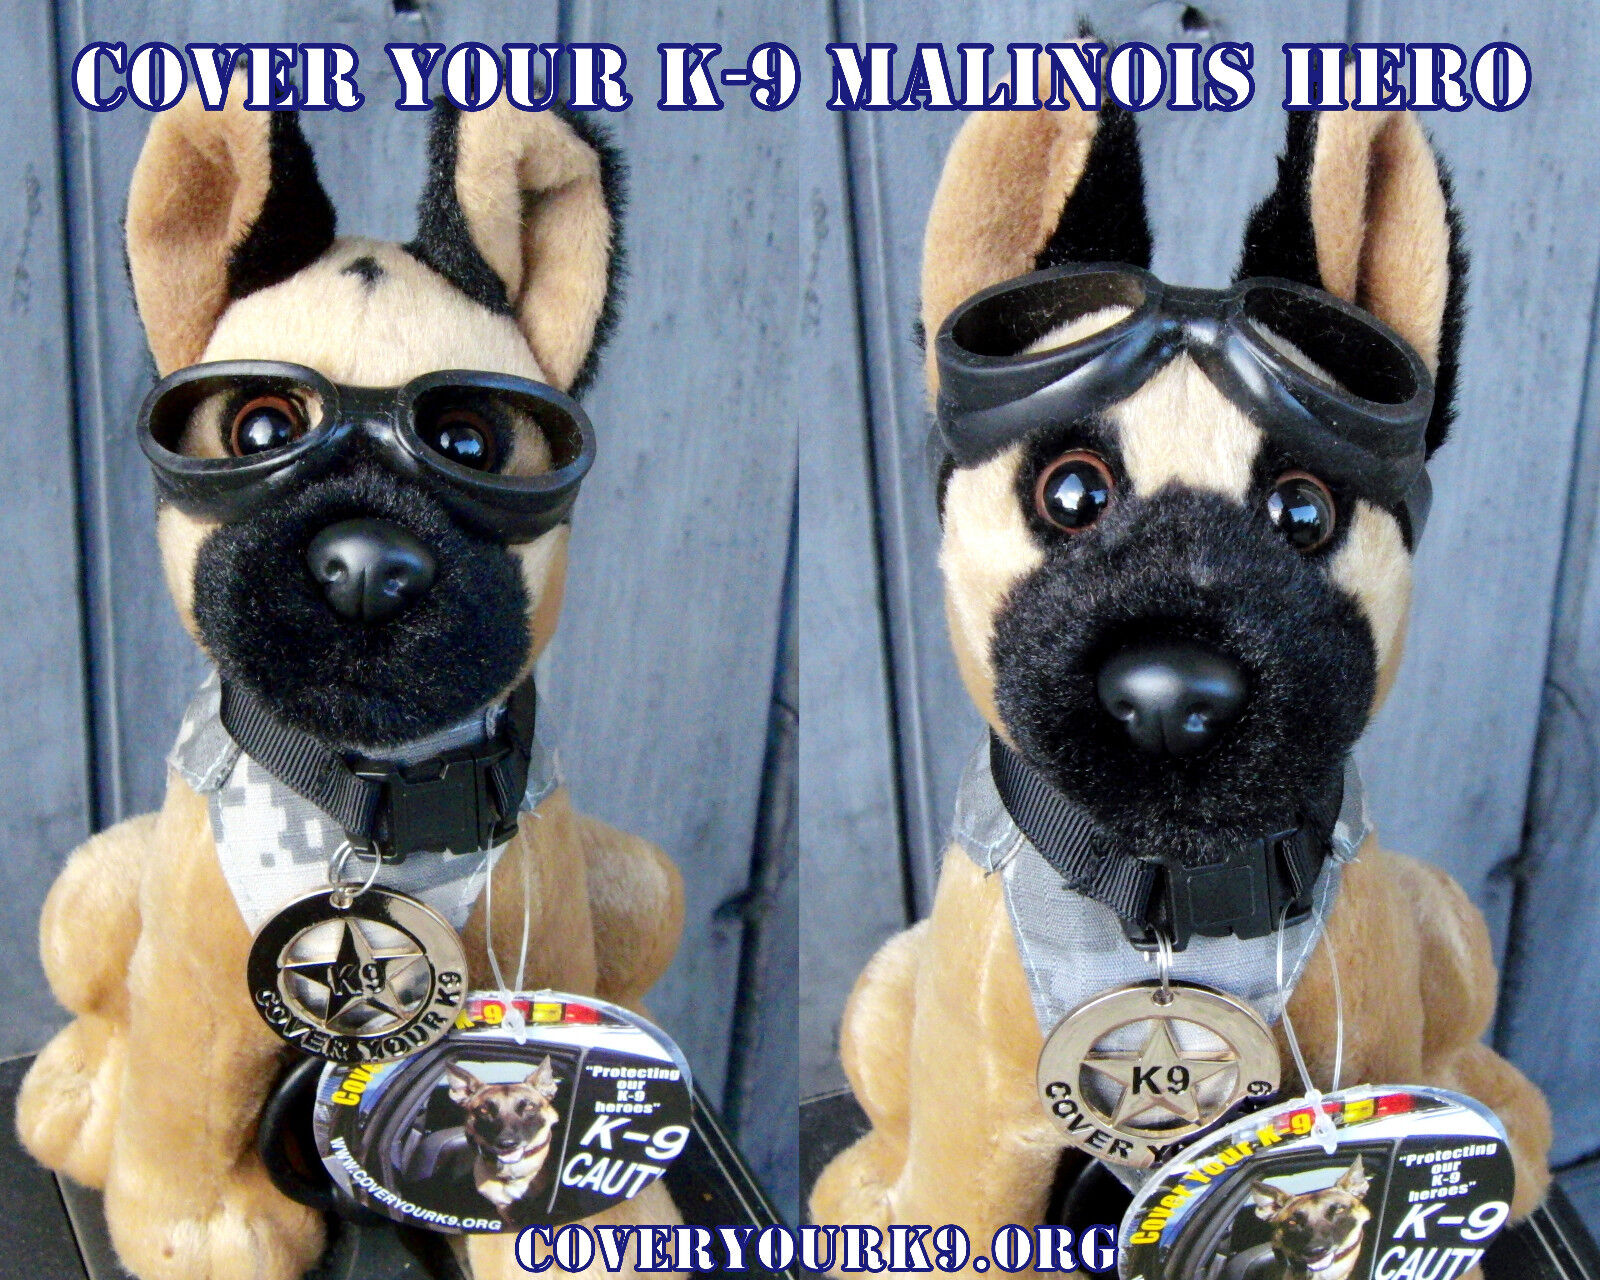 Belgian Malinois K9 MWD Police Dog with Doogles Badge Camo Vest Fundraiser